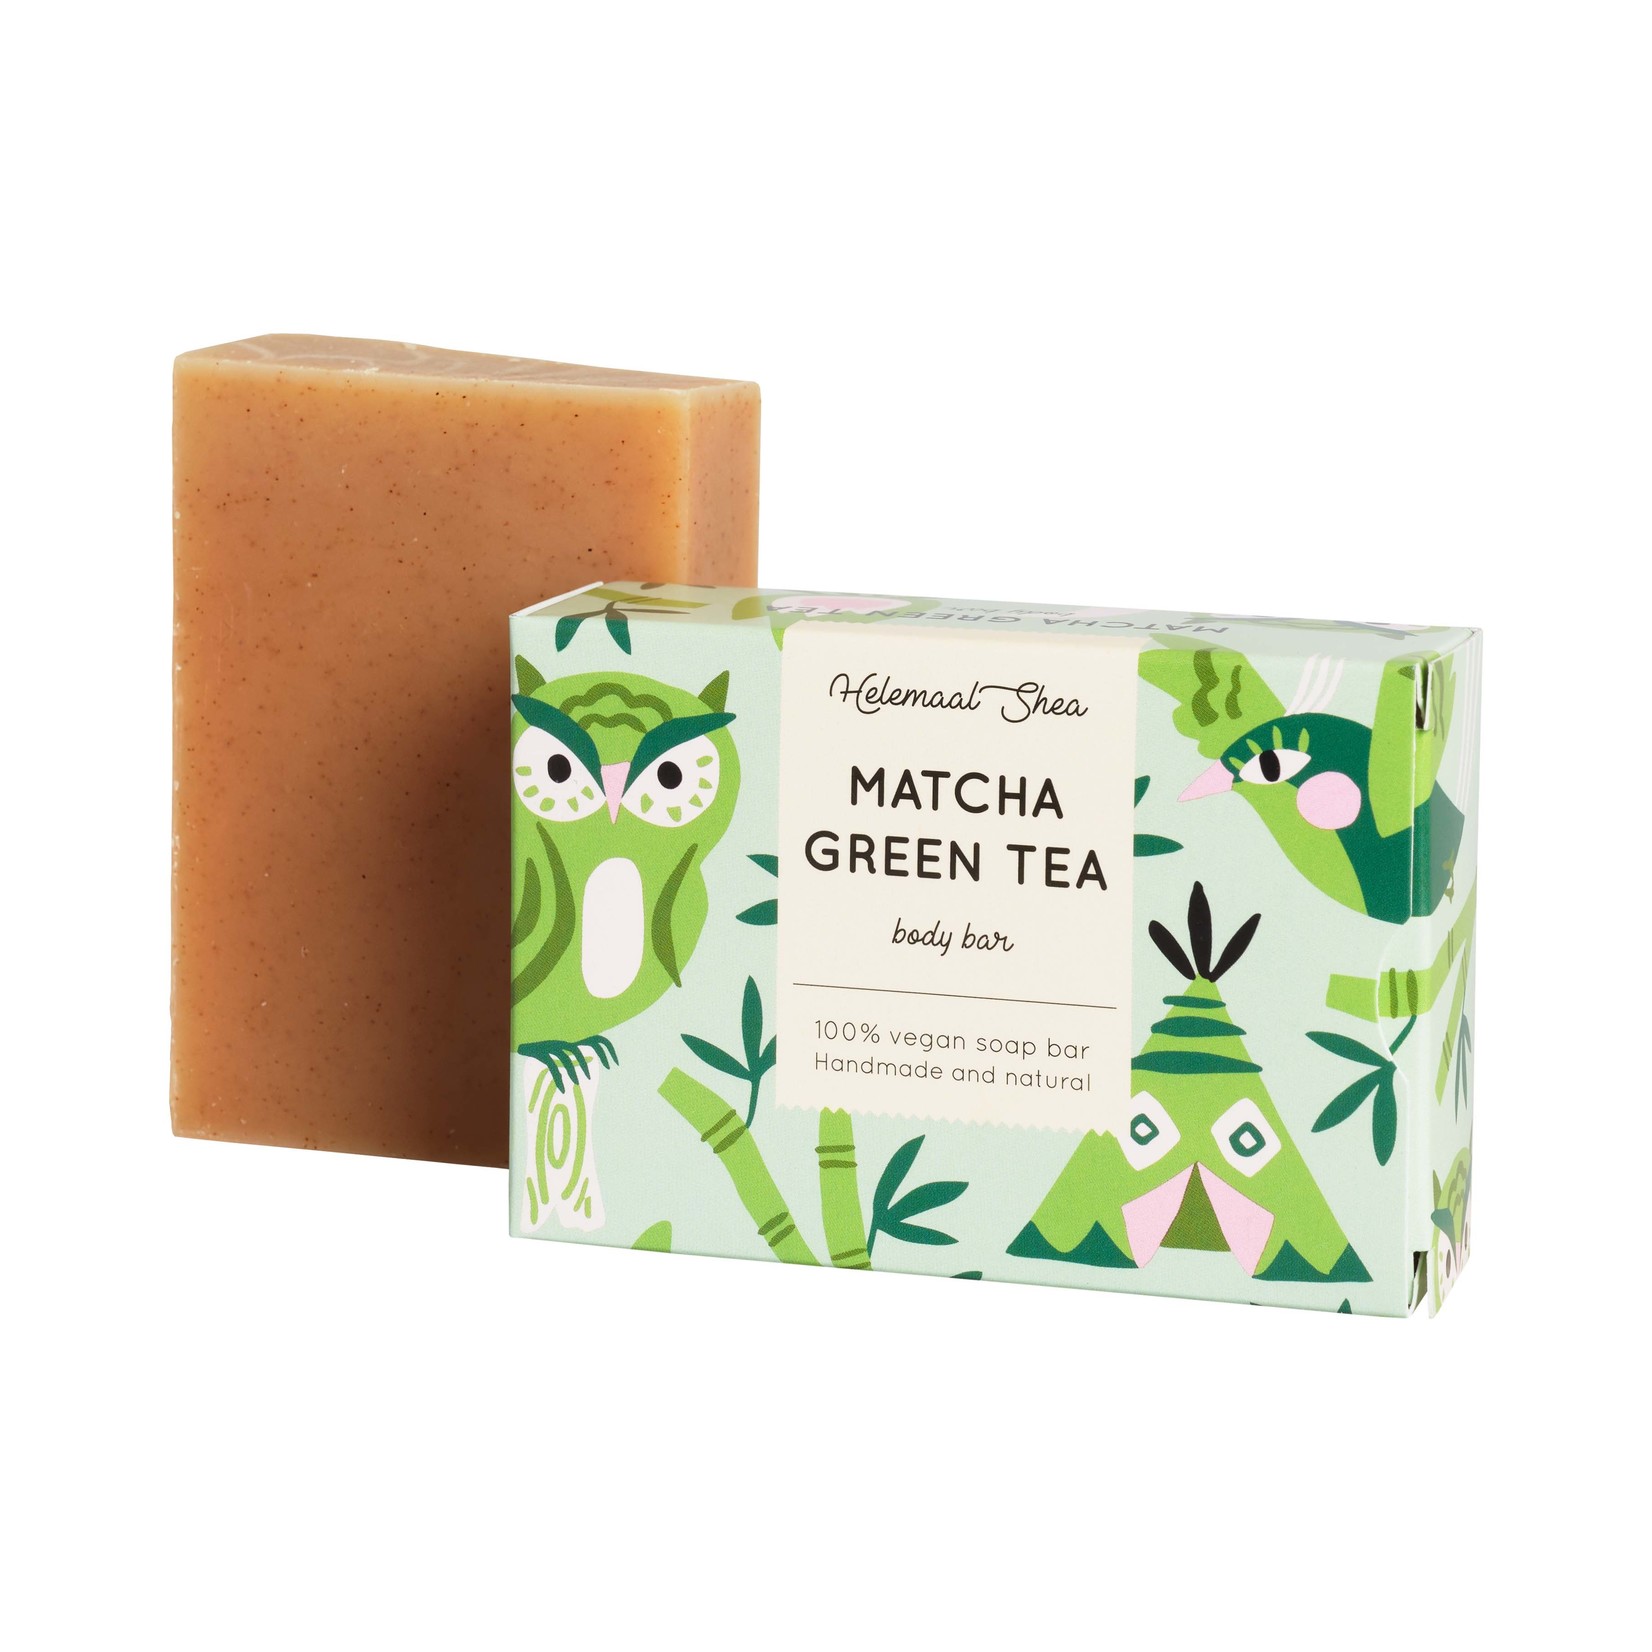 Matcha Green Tea soap